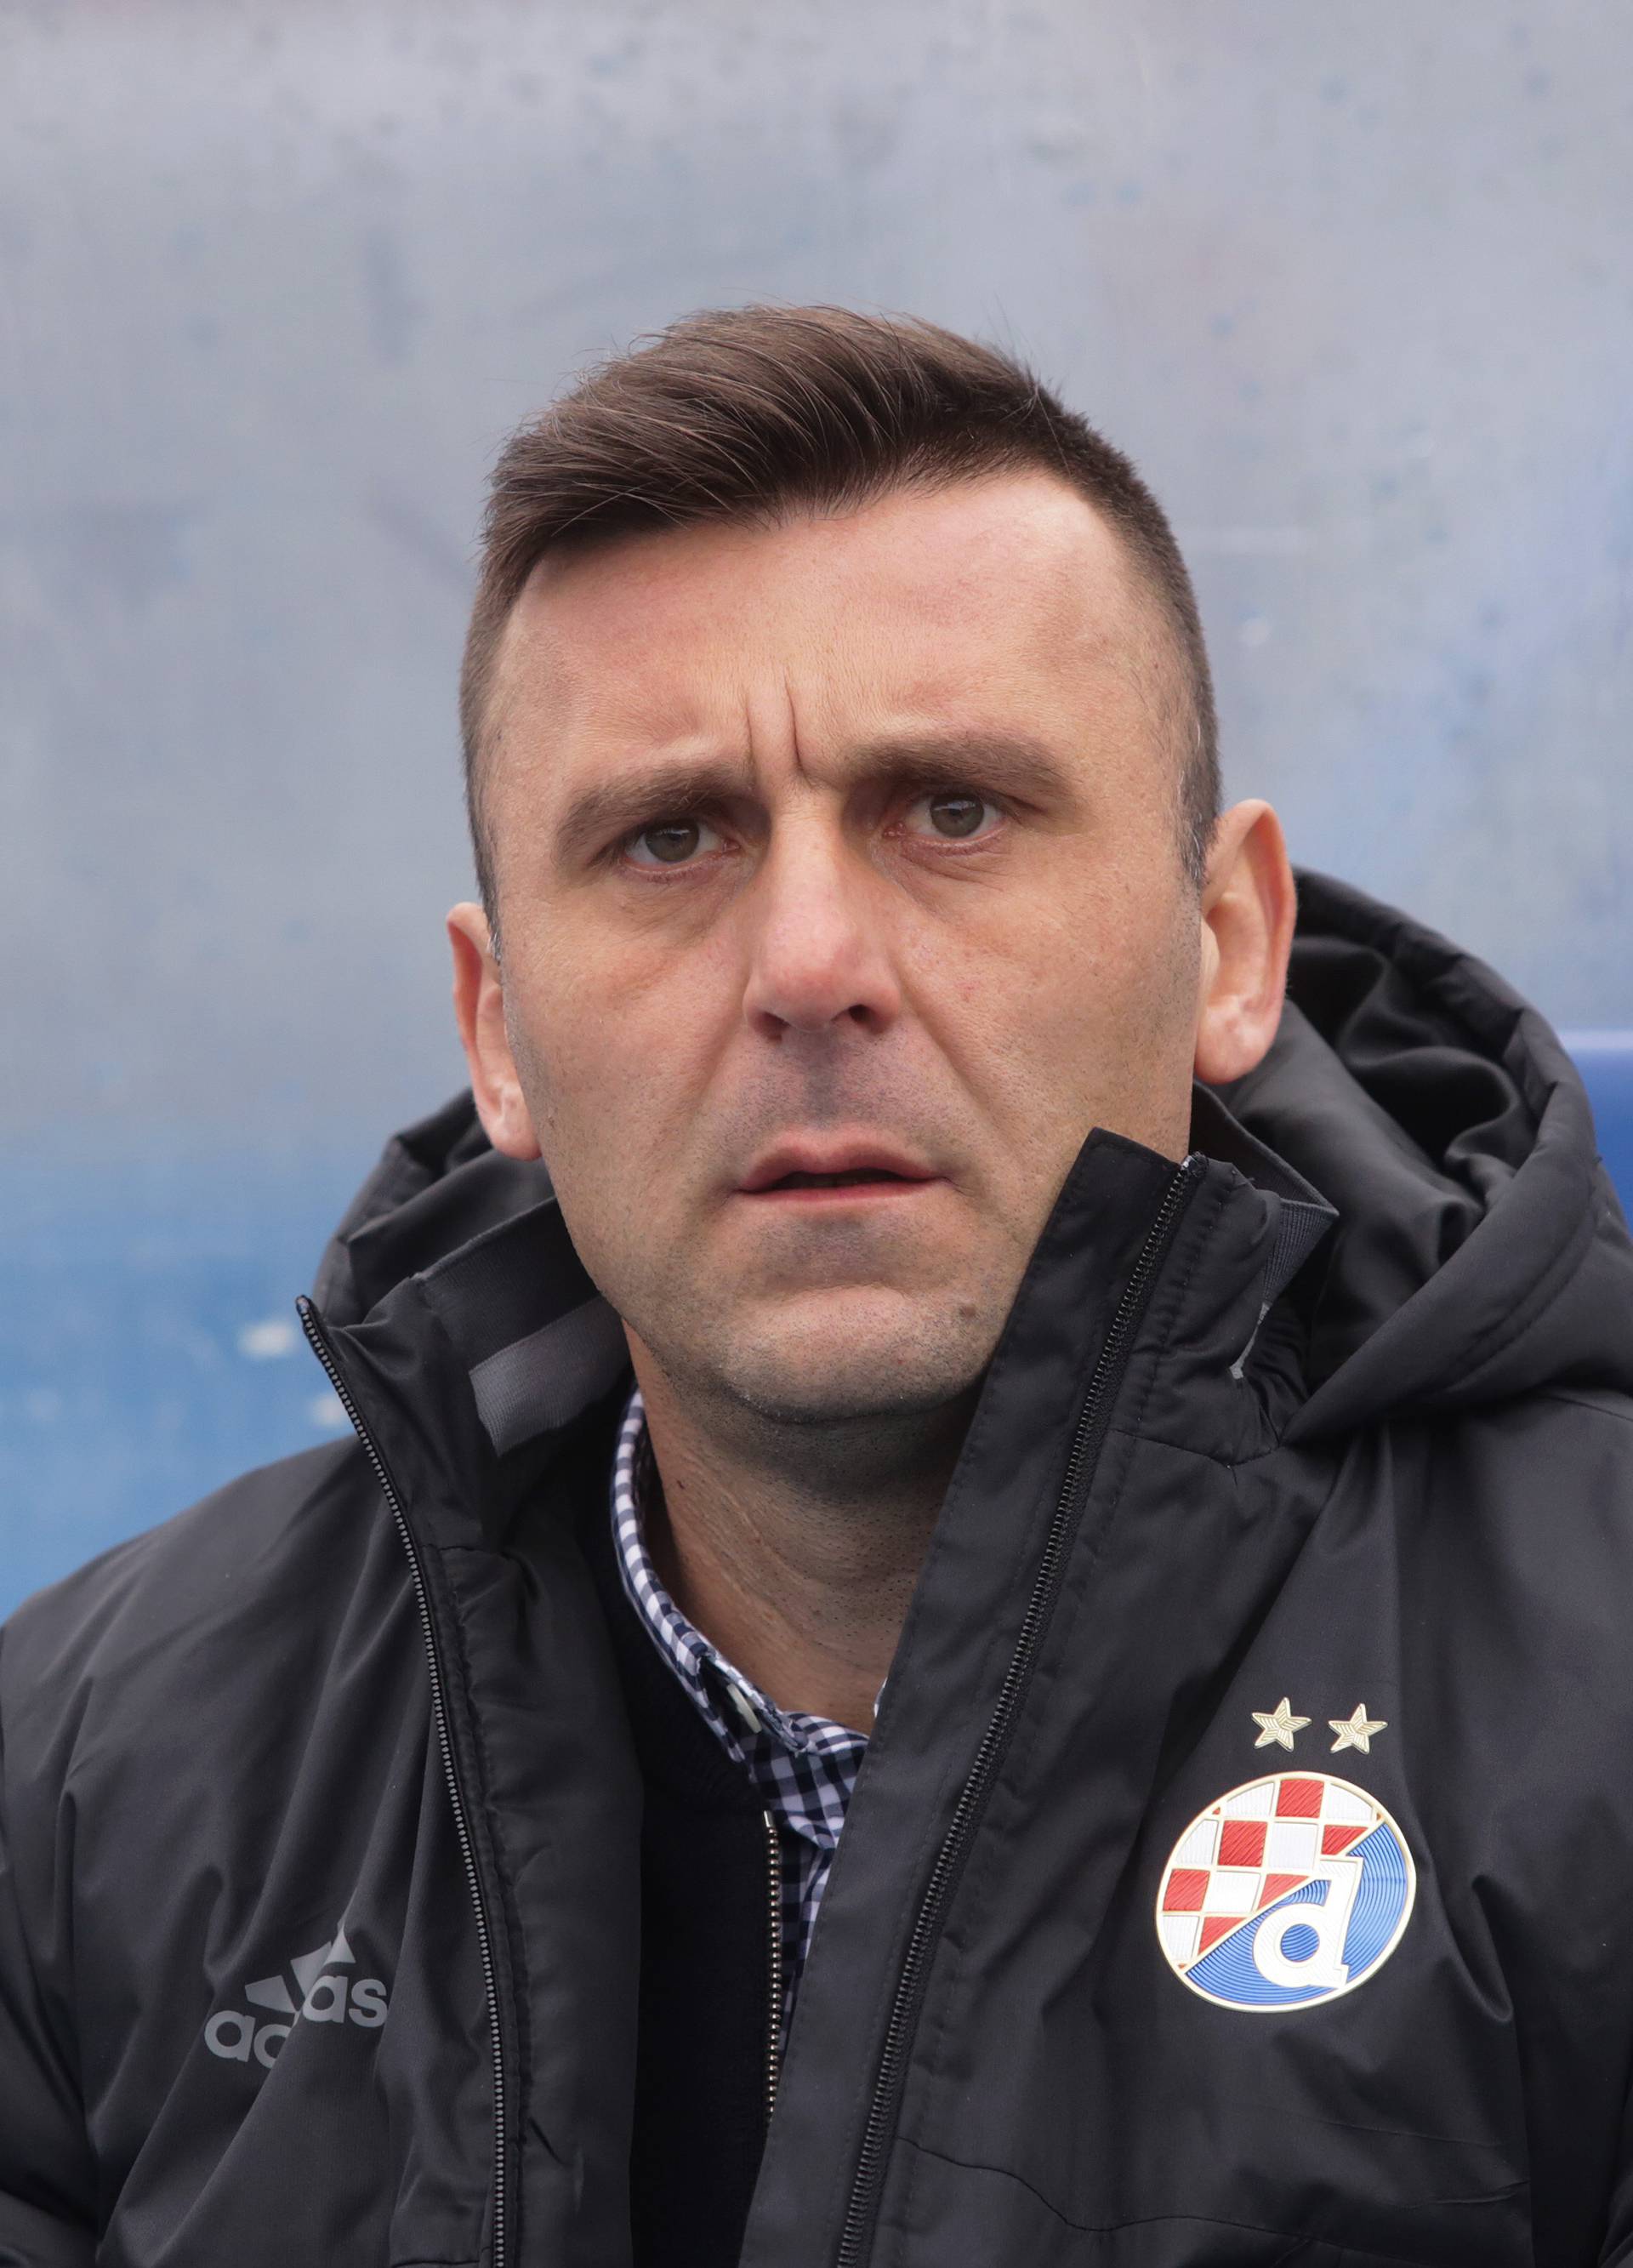 Hajduk nanio Dinamu 1. poraz u sezoni. I to s igračem manje!